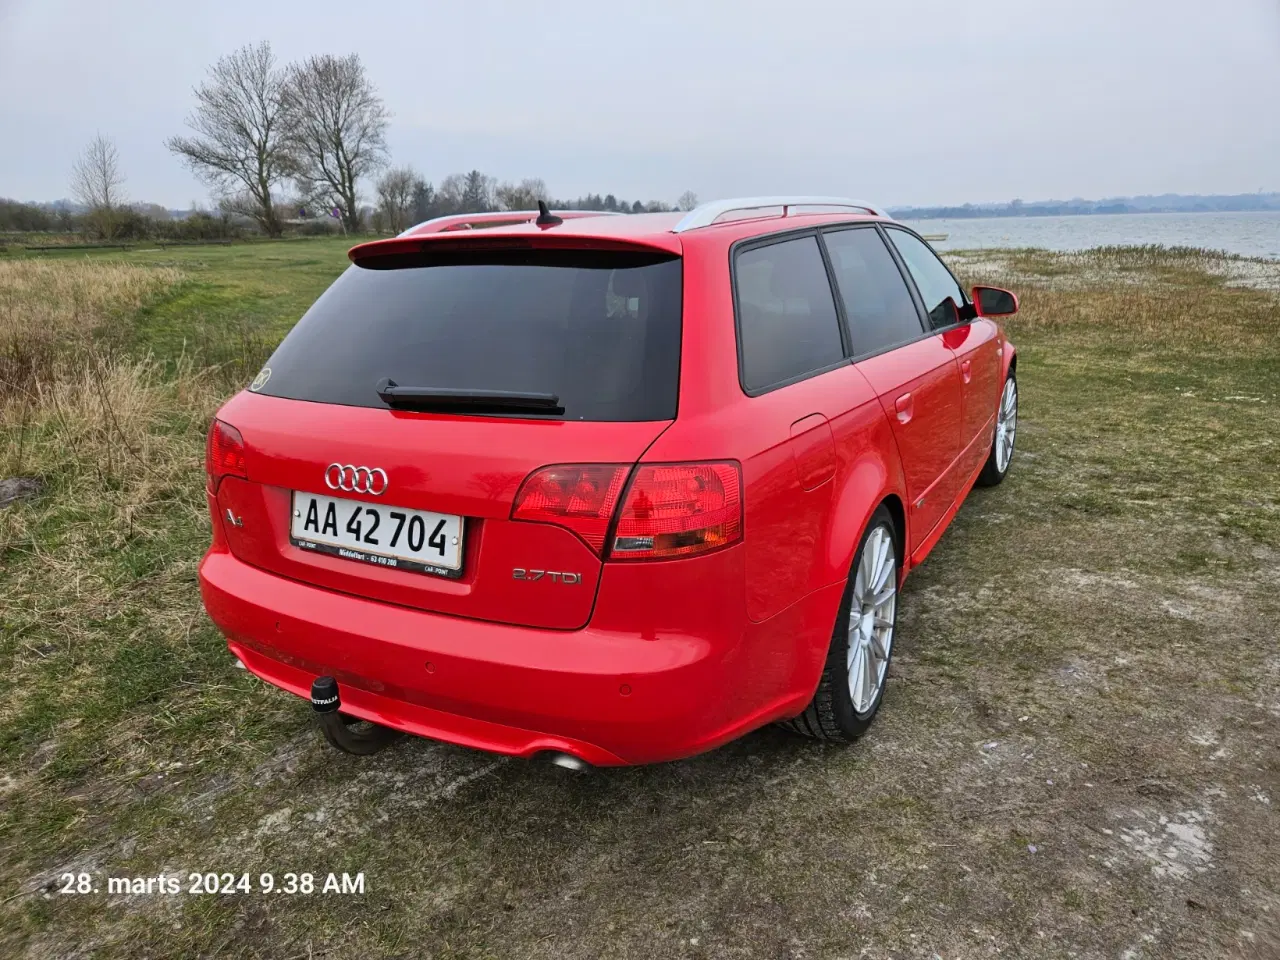 Billede 4 - Audi A4 Avant 2.7 V6 Turbo Diesel. Nysynet.